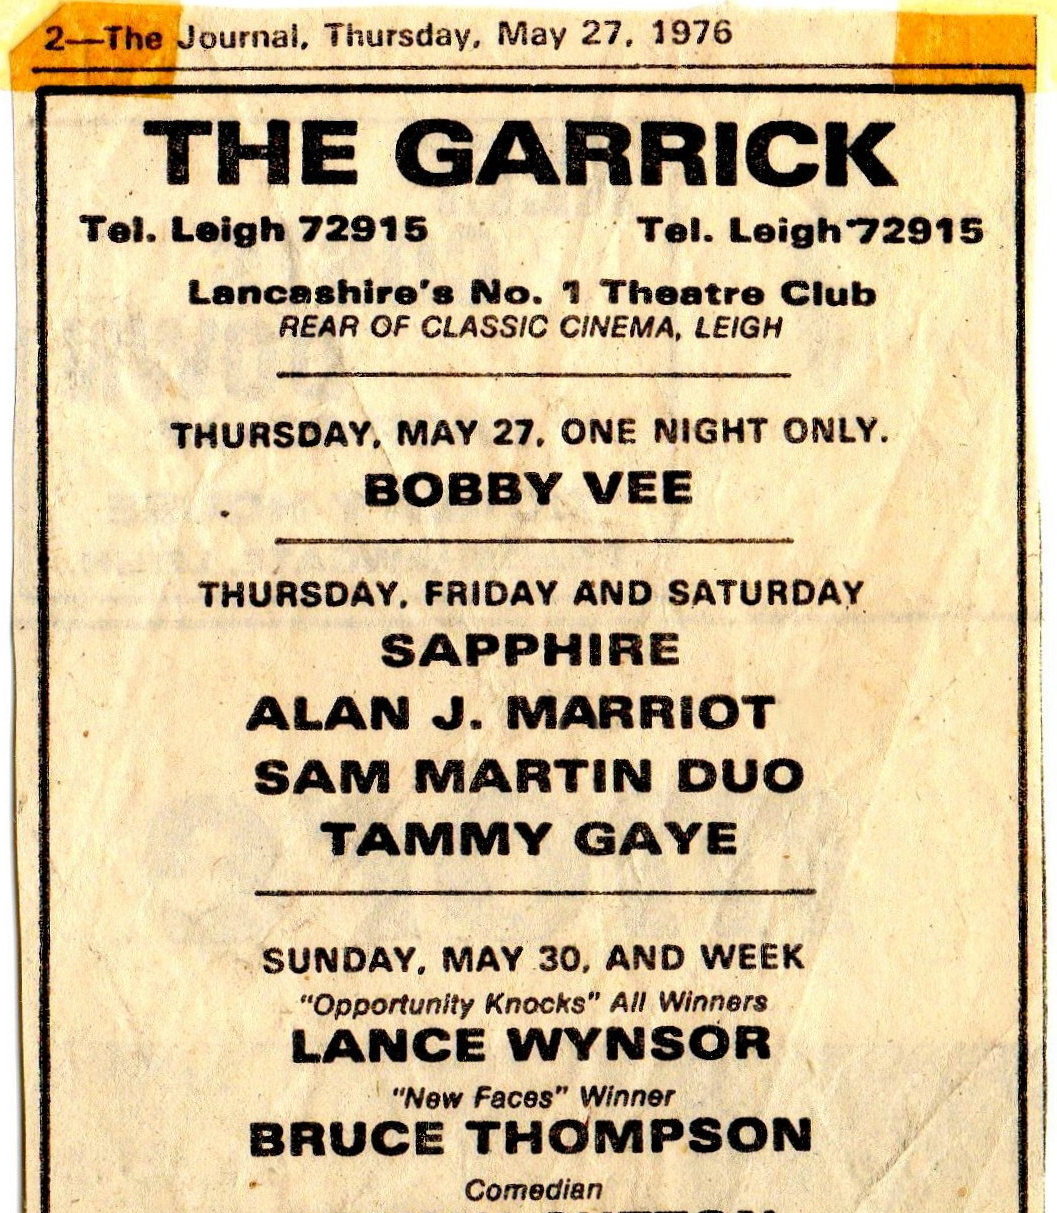 A.J Marriot Garrick Club  Leigh Bobby Vee Show